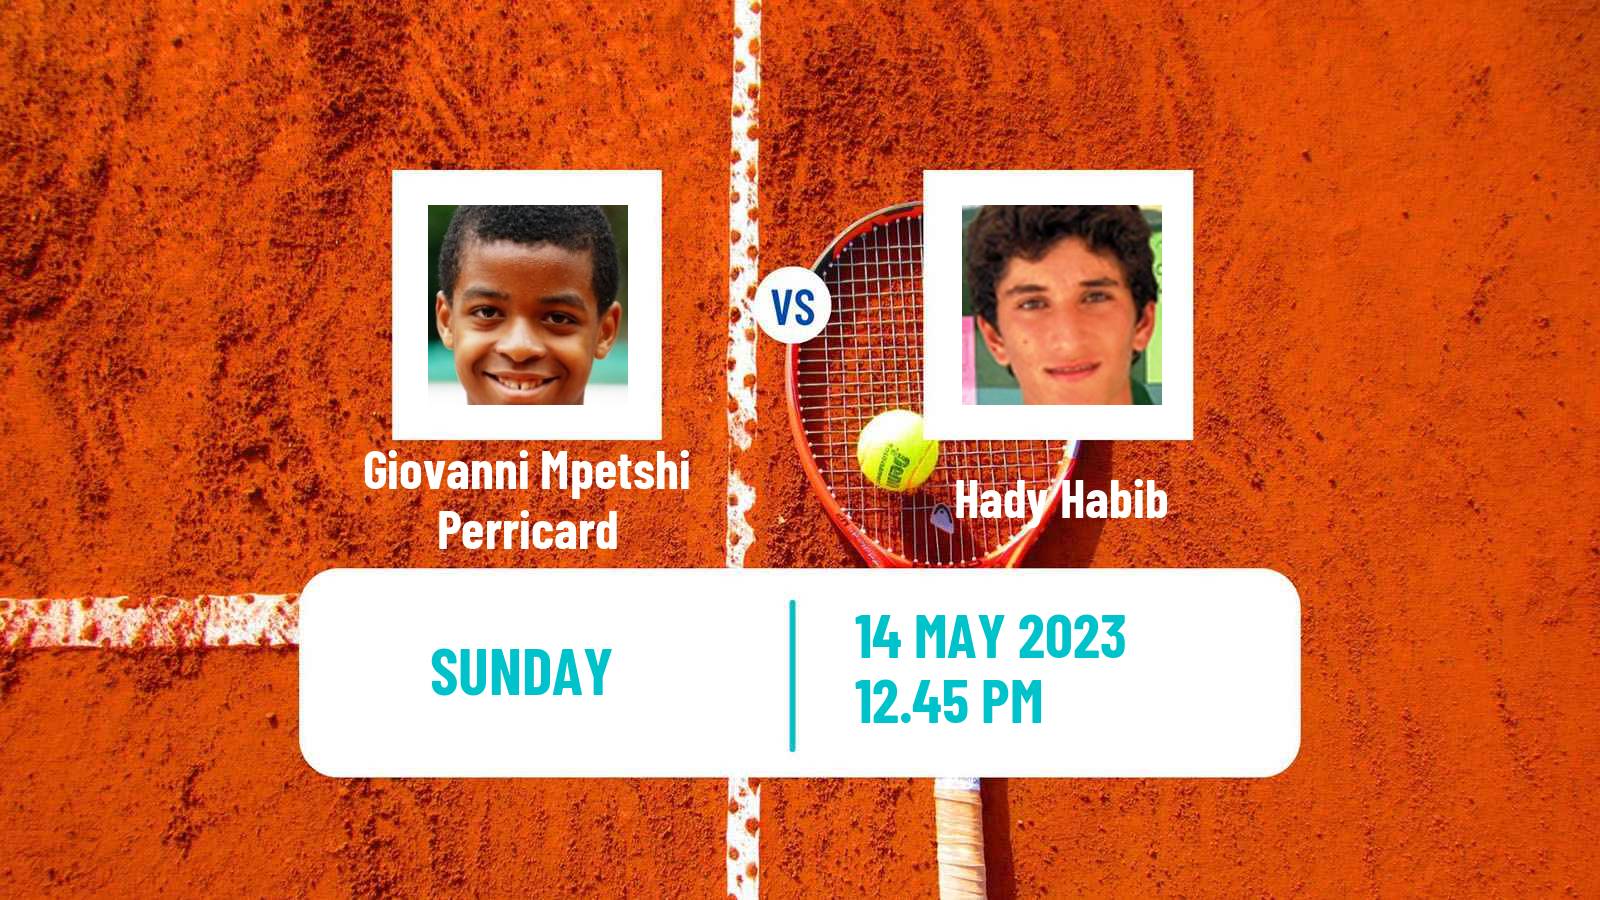 Tennis ATP Challenger Giovanni Mpetshi Perricard - Hady Habib